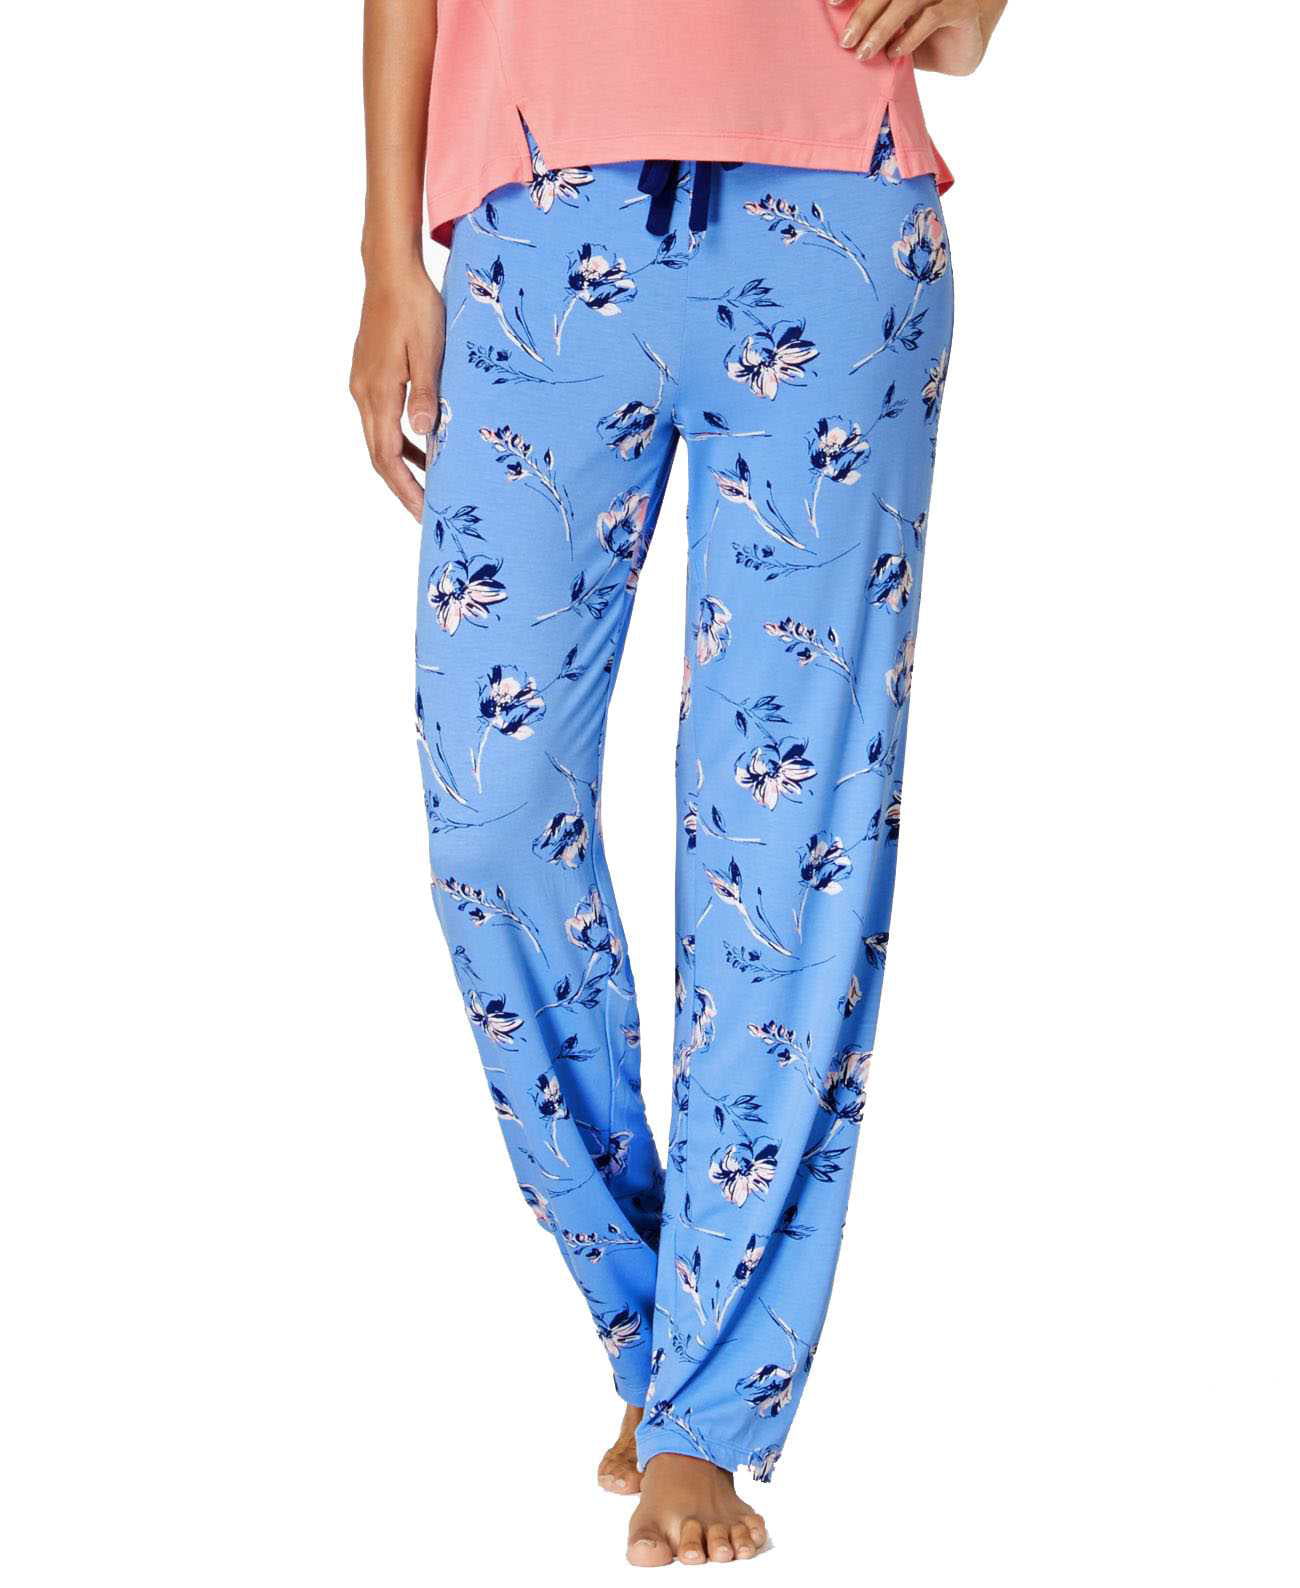 Alfani Knit Floral Printed Pajama Pants (Navy, 3XL) - Walmart.com ...